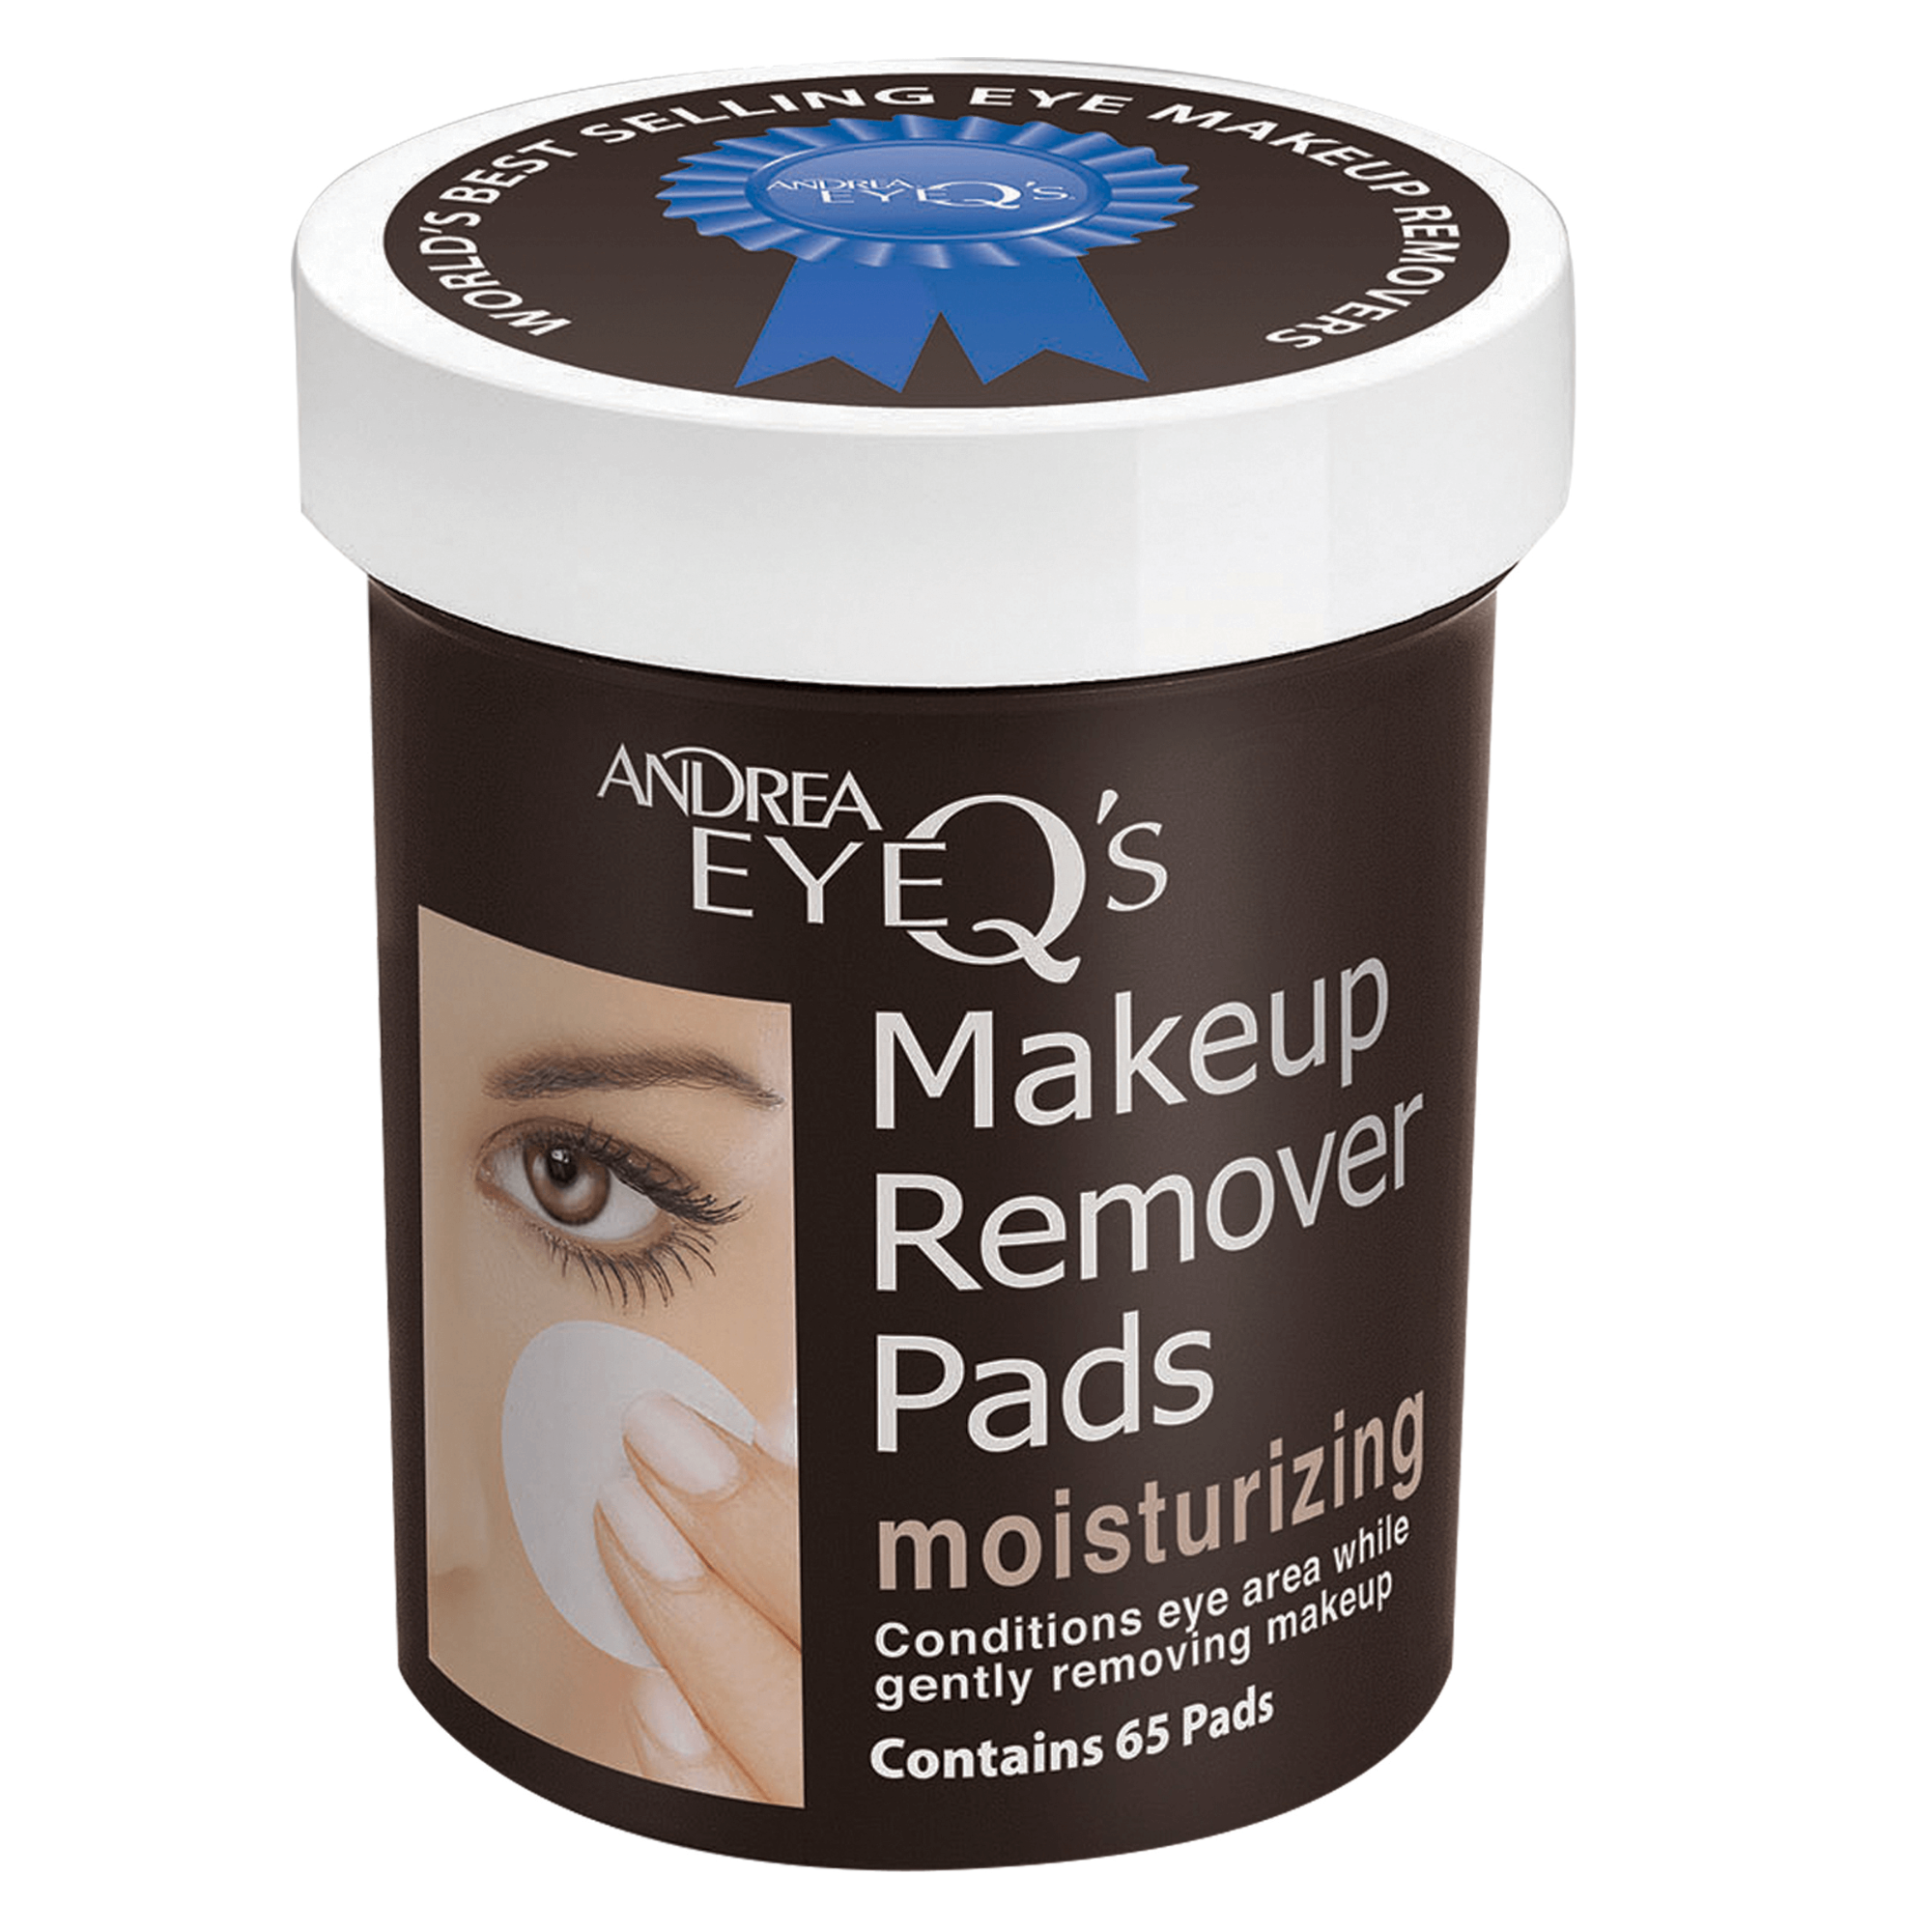 EyeQ’s Makeup Remover Pads, Moisturizing